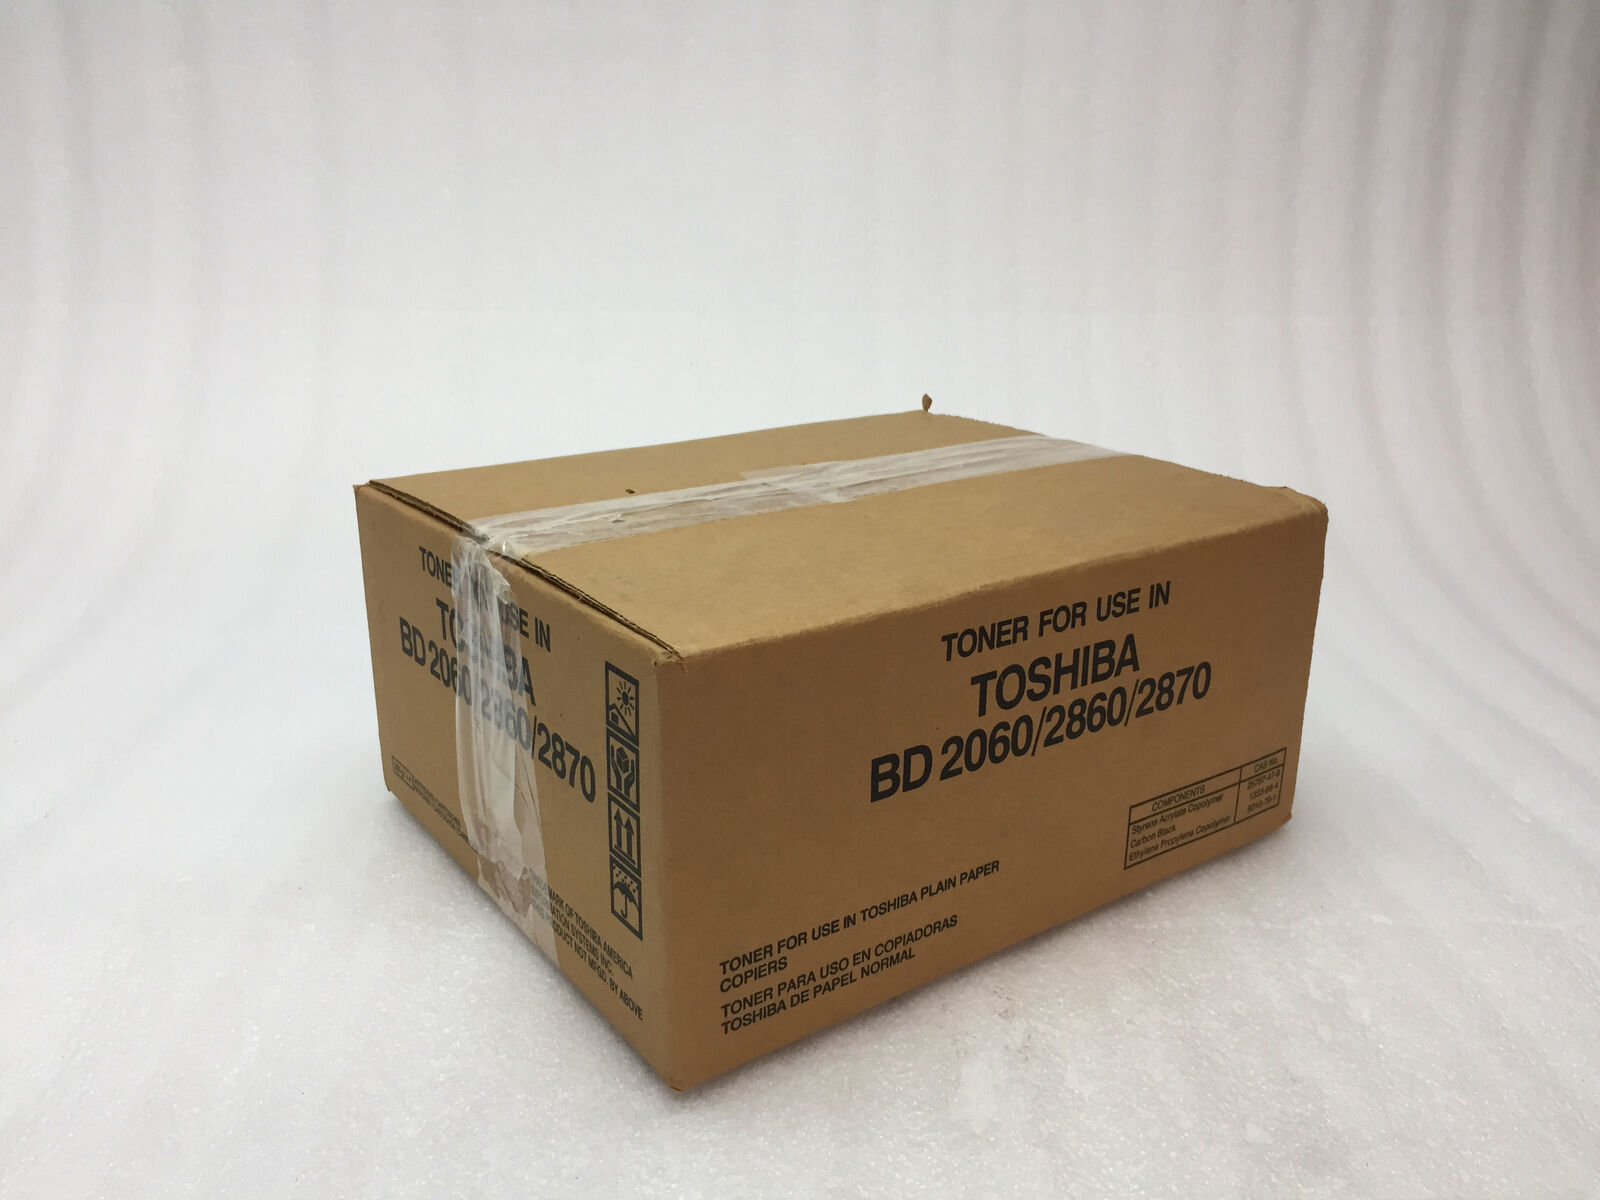 Genuine OEM Toshiba BD 2060/2860/2870 Toner Cartridge, Color Black, Open Box